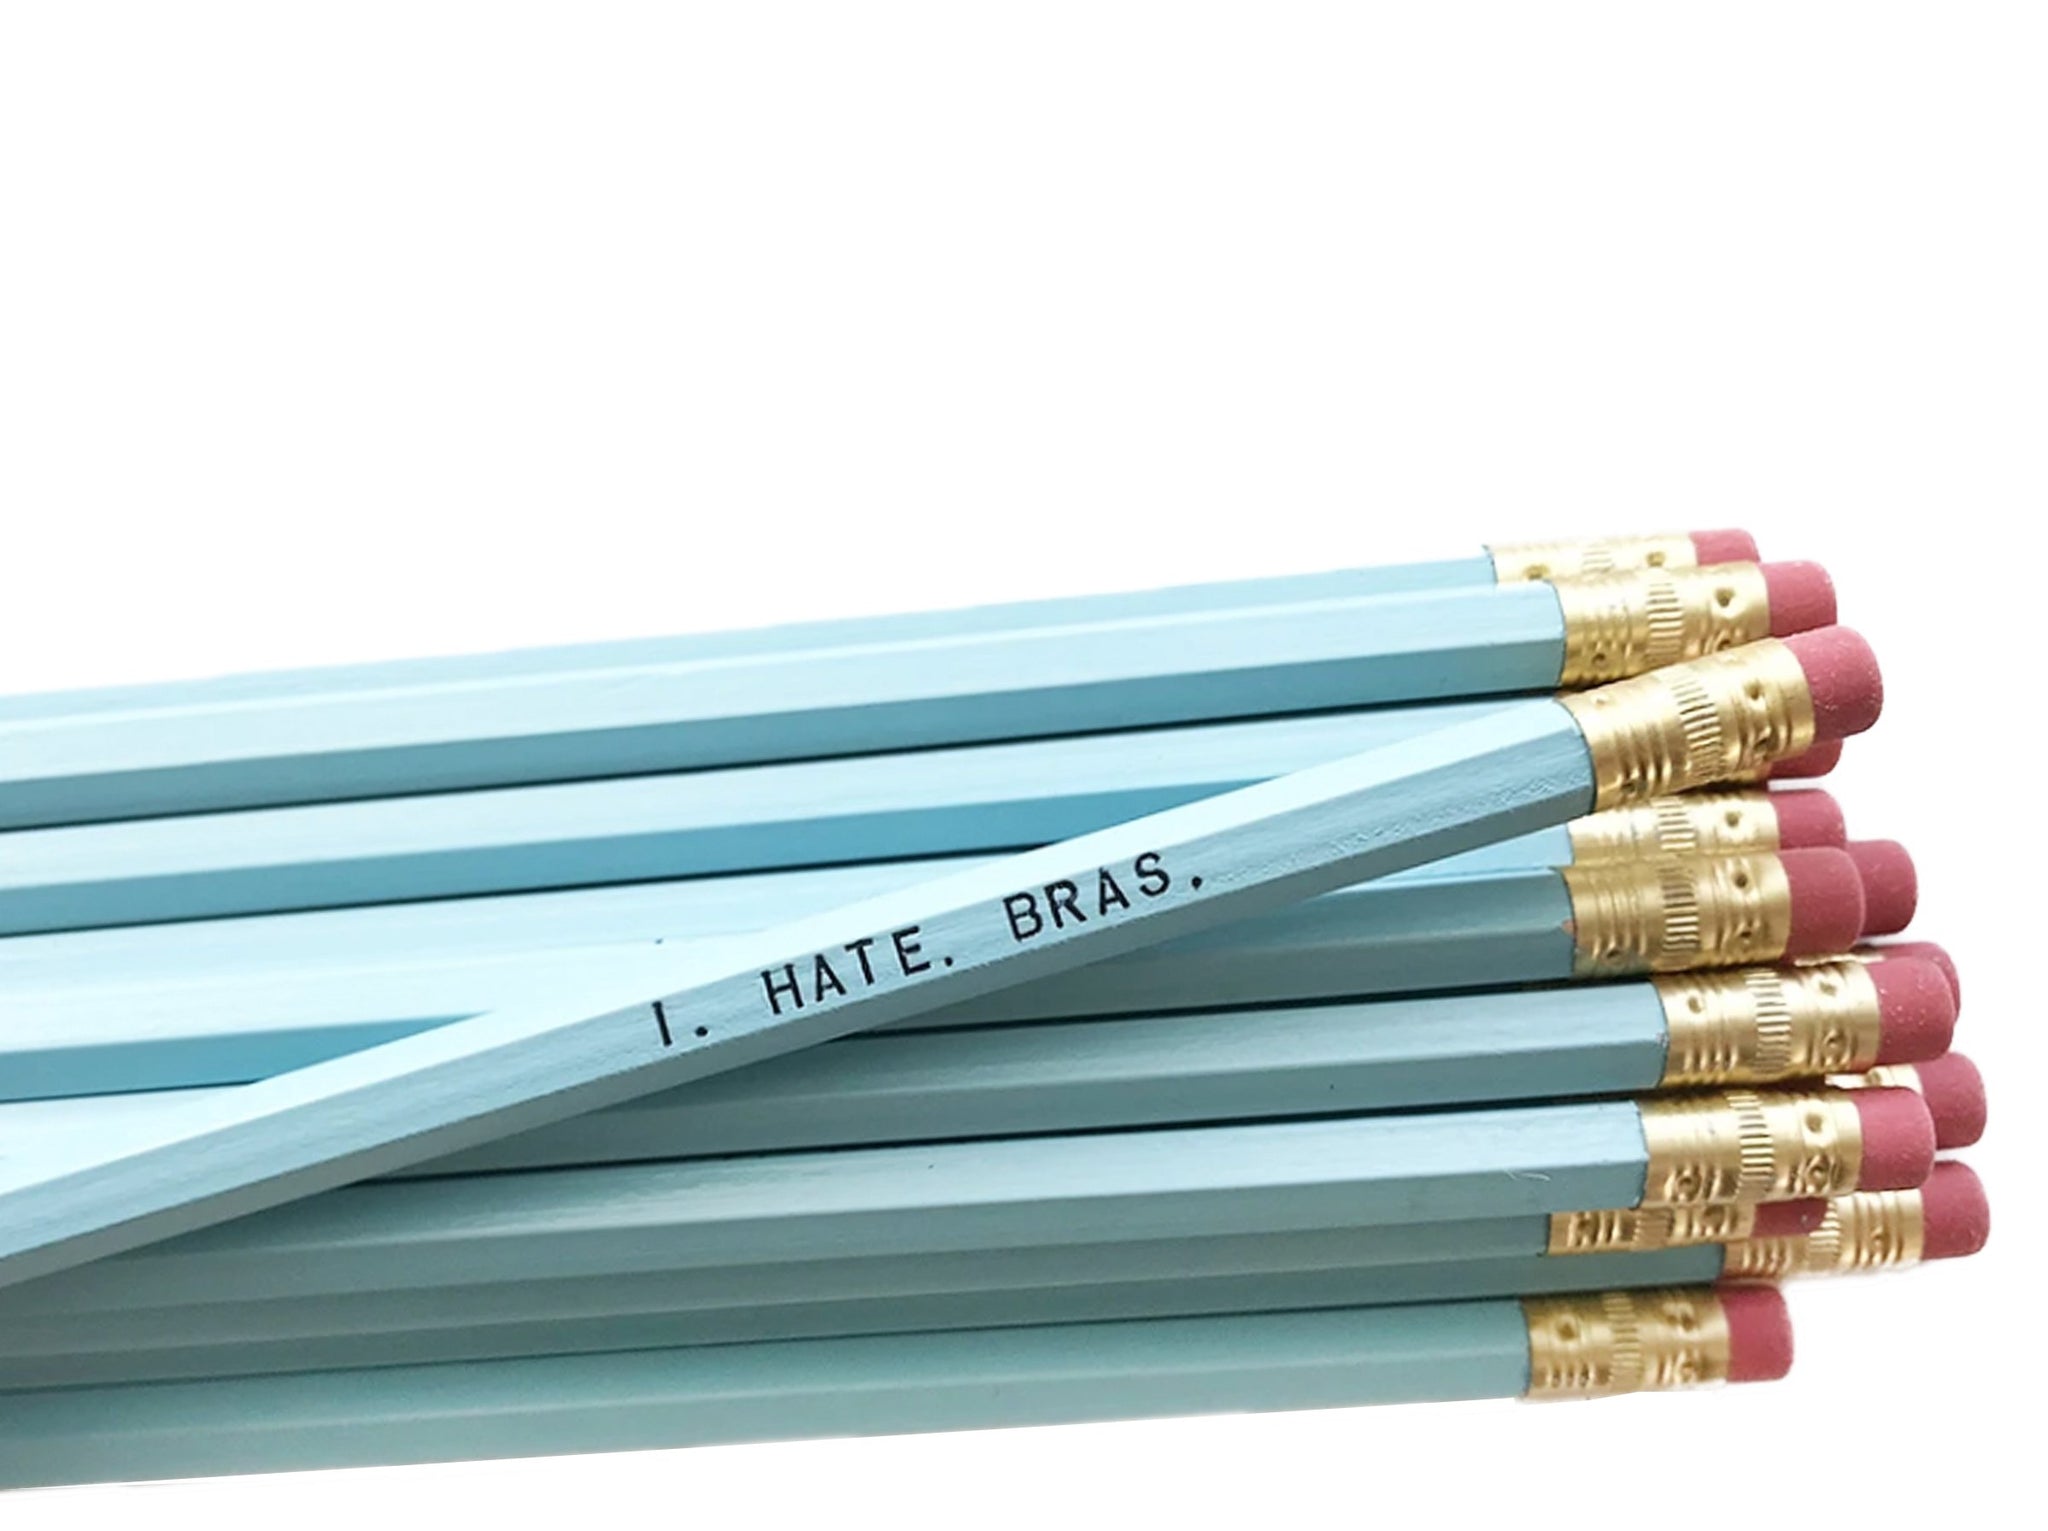 I. Hate. Bras. Pencil - FOLD goods